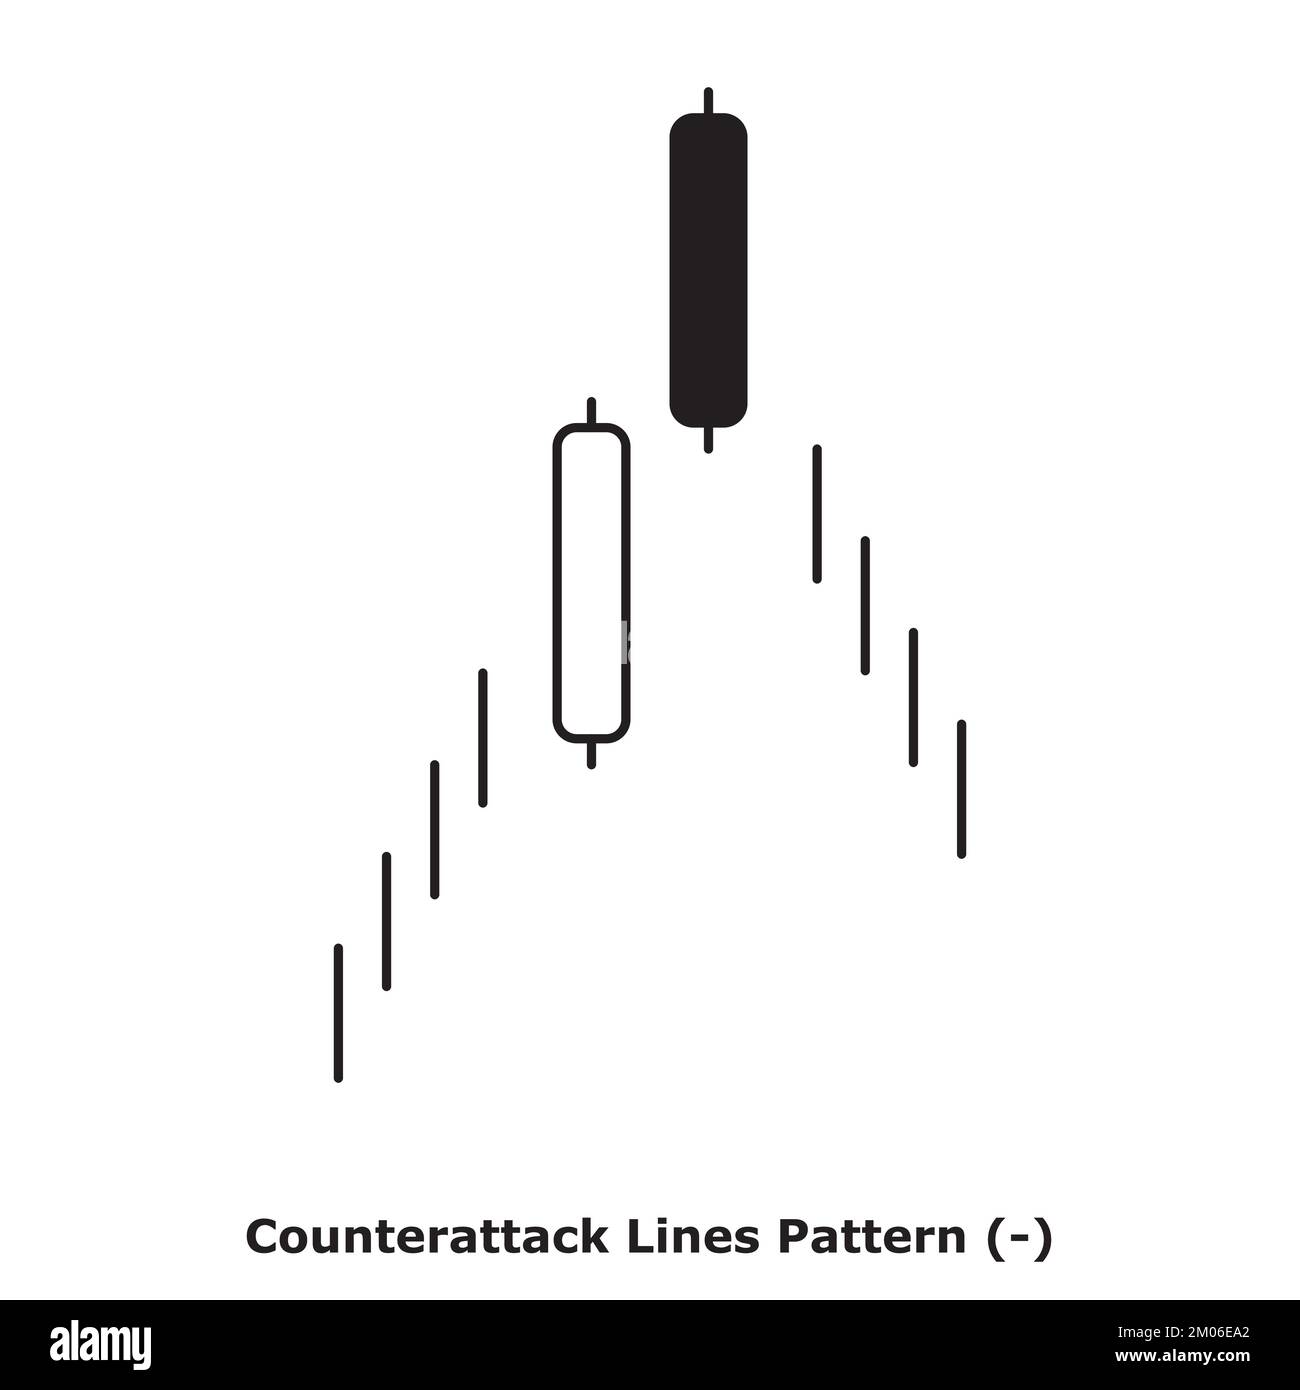 Counterattack Lines Pattern - Bearish - White & Black - Round - Bearish Reversal Japanese Candlestick Pattern - Double Patterns Stock Vector